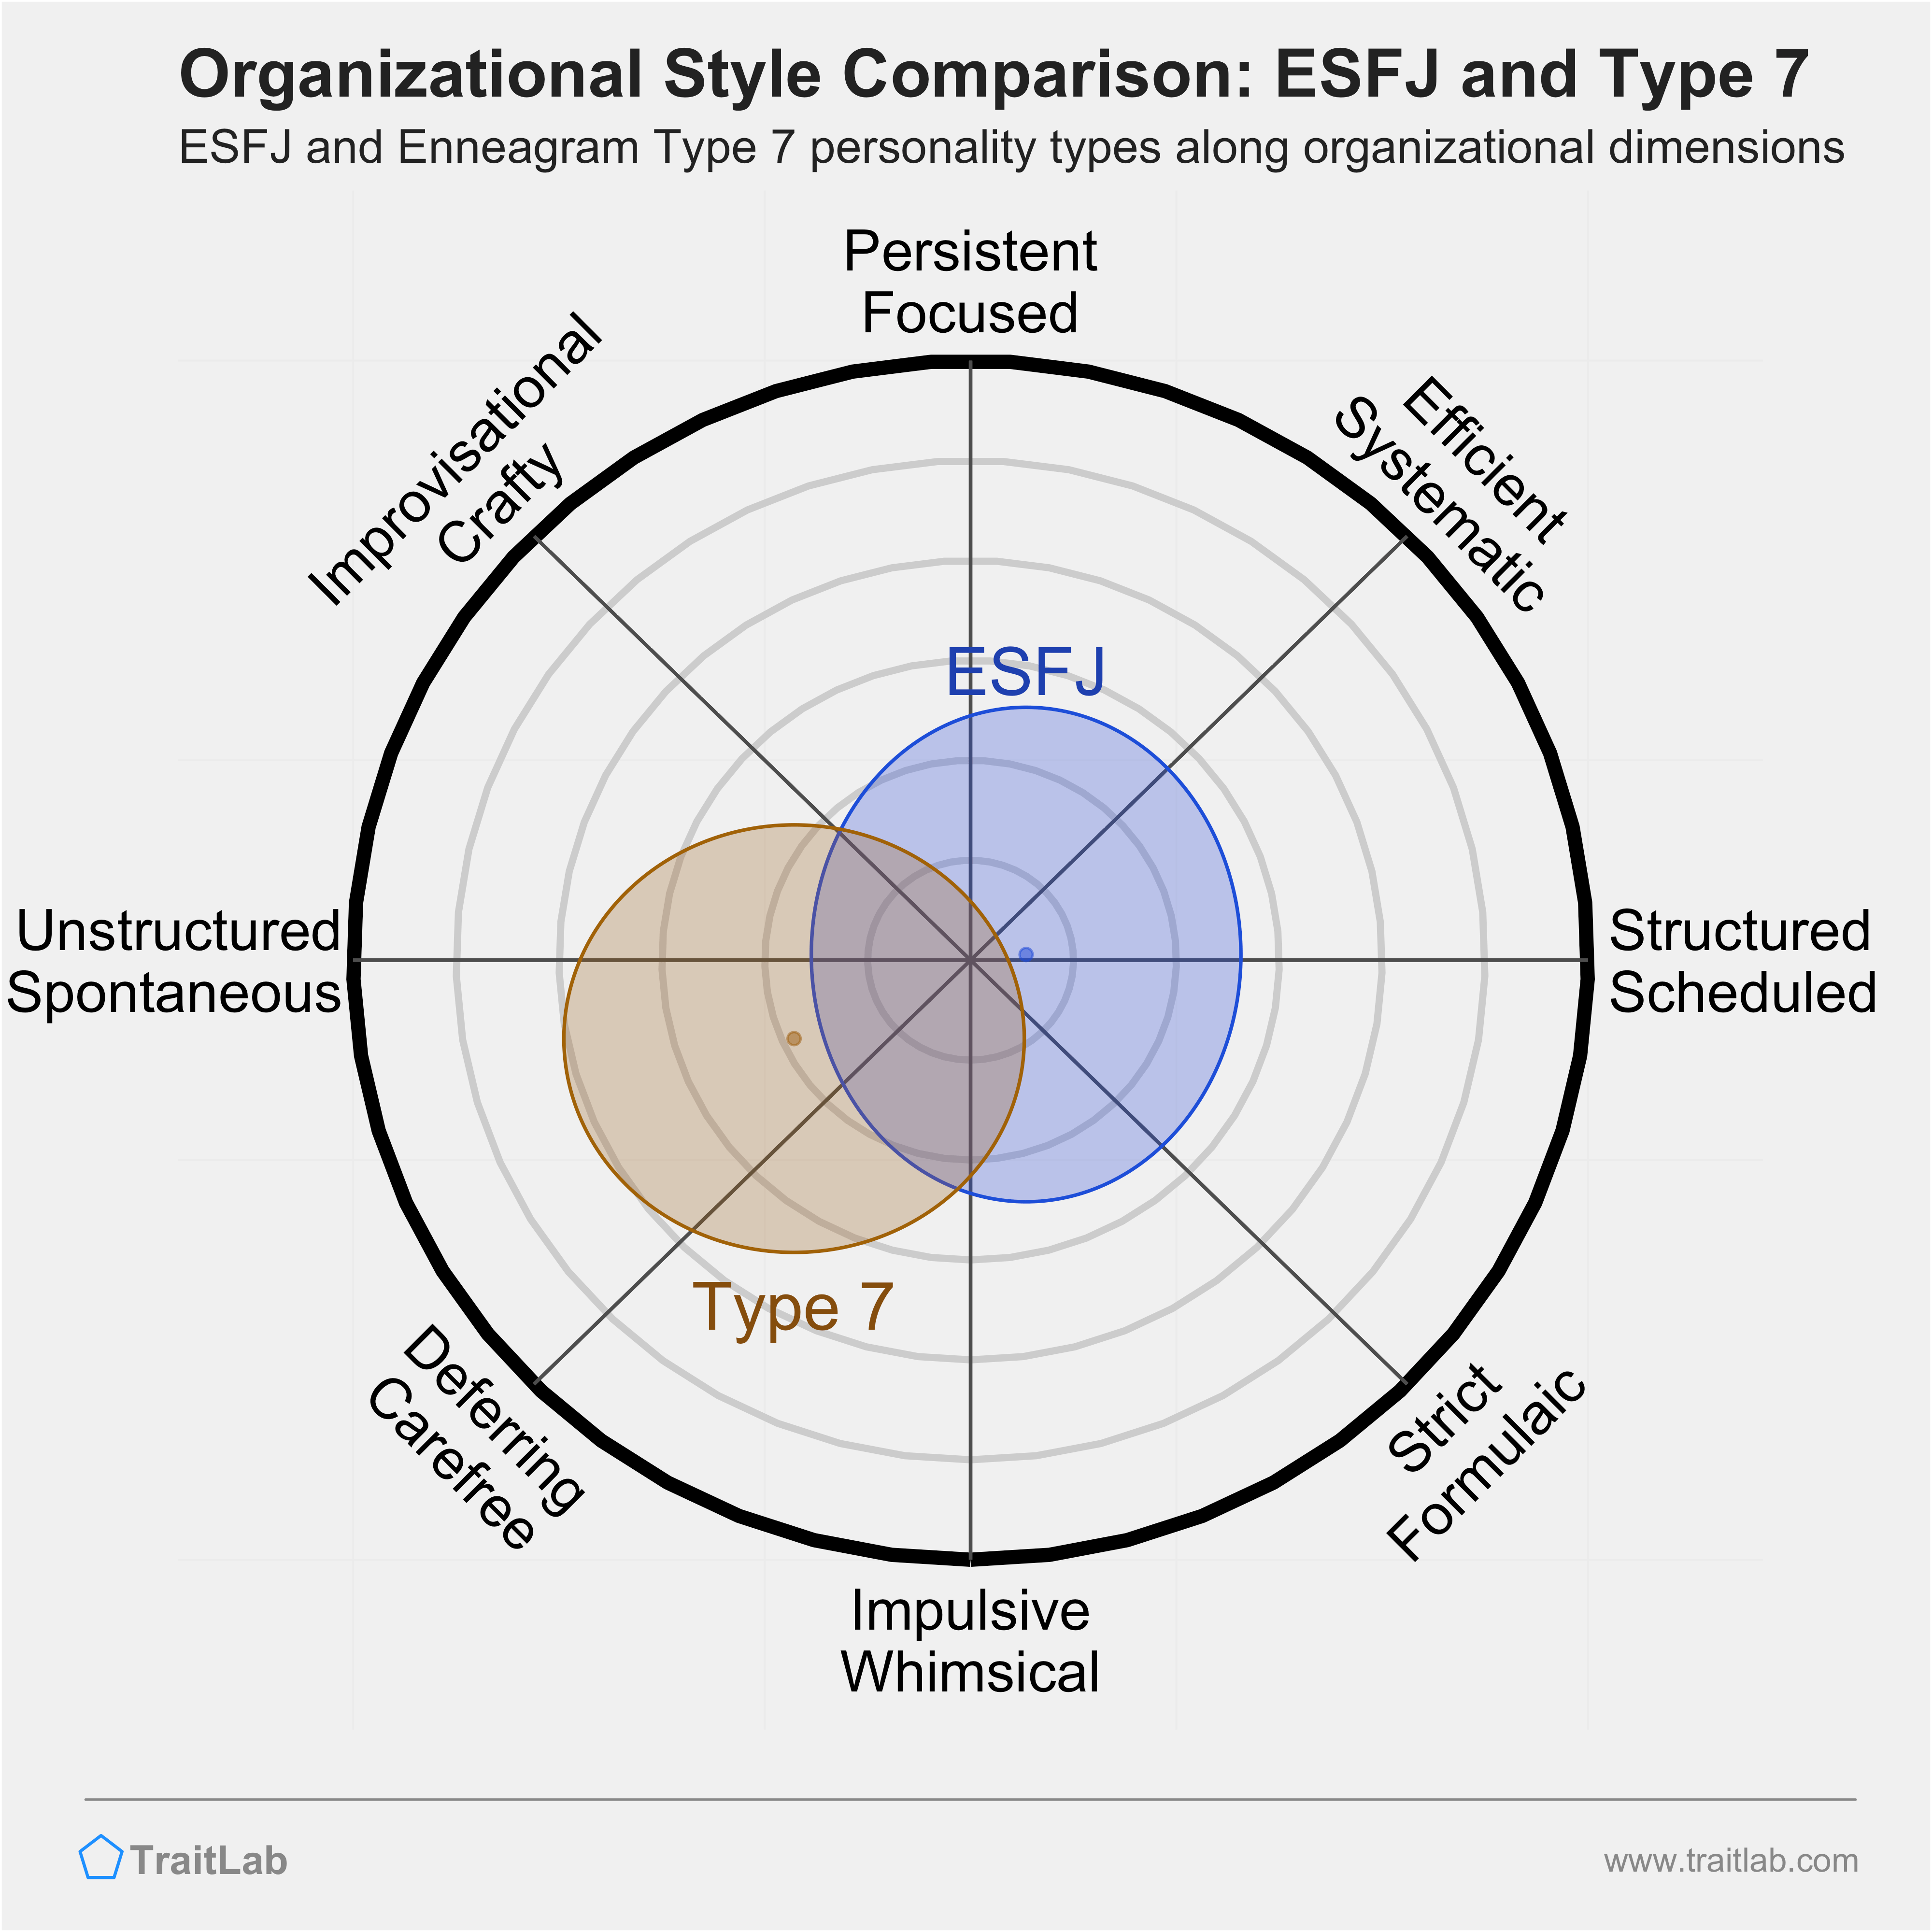 ESFJ and Type 7 comparison across organizational dimensions